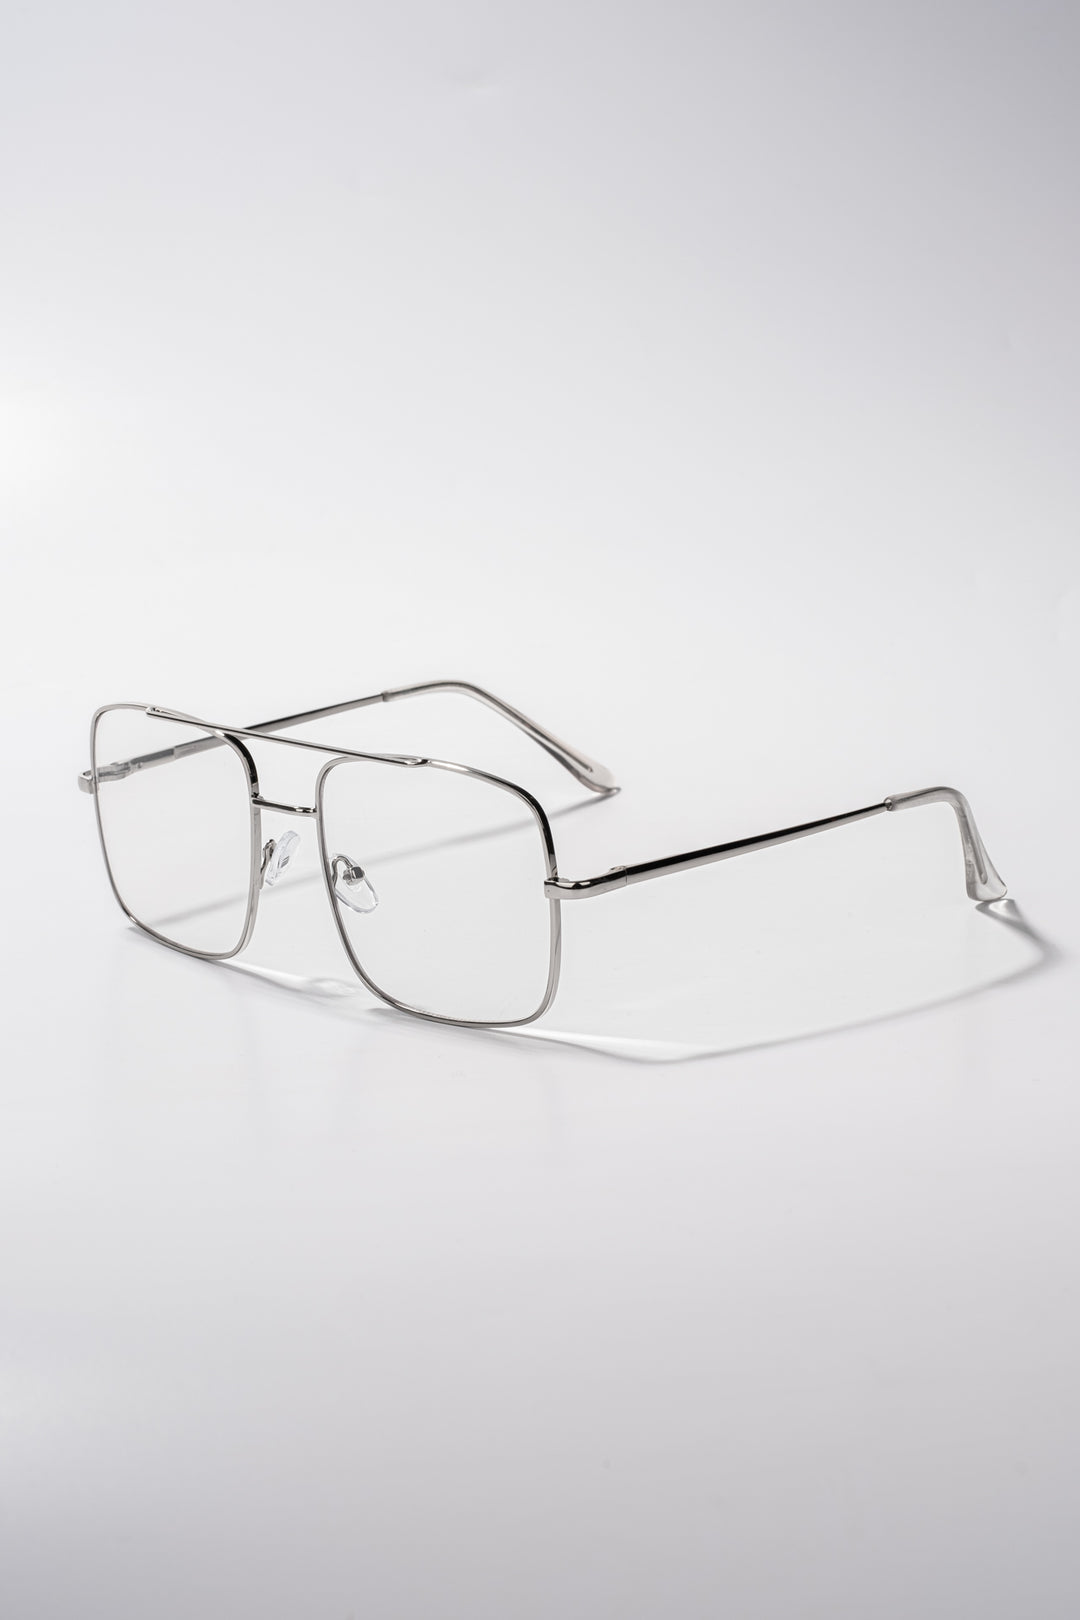 Benjamın Blue Light Protection Glasses